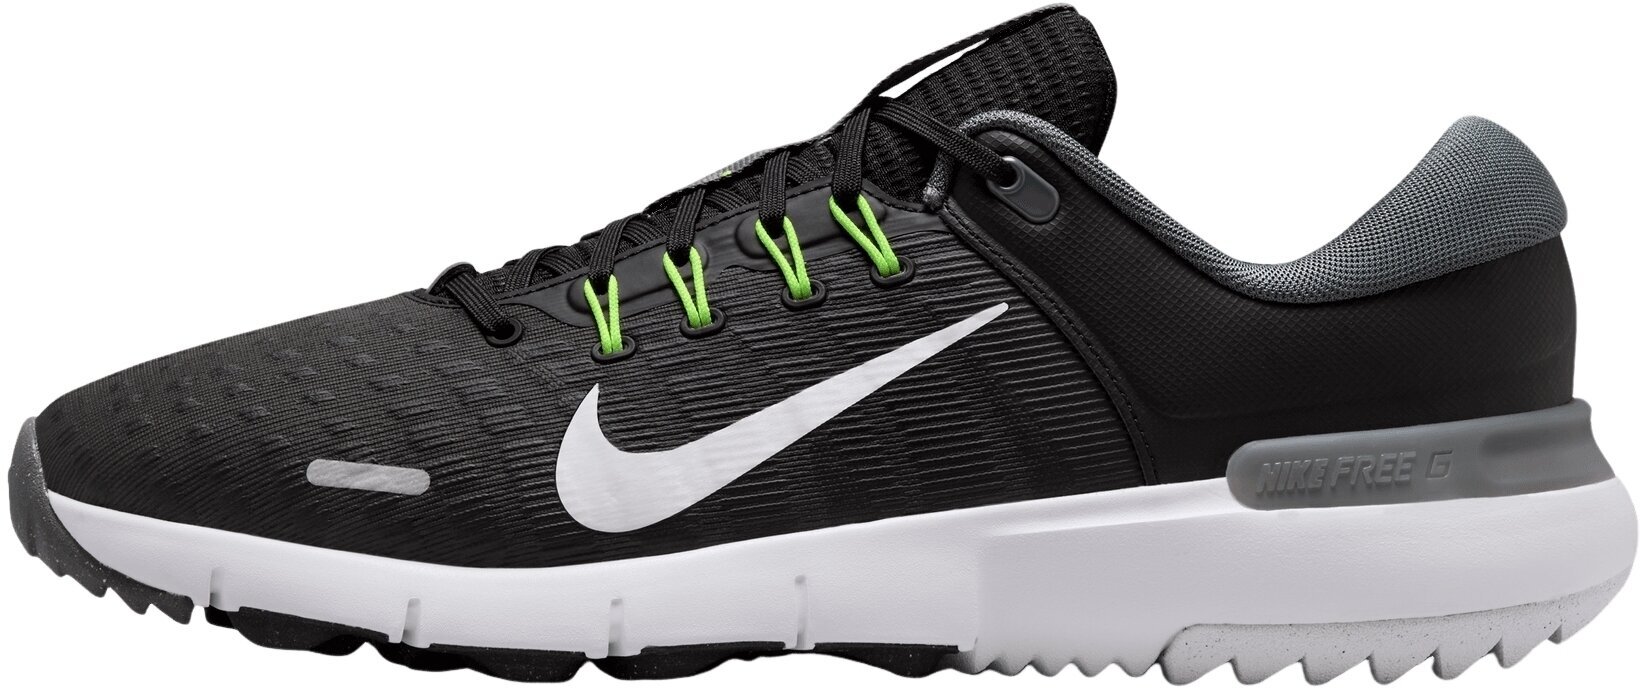 Men's golf shoes Nike Free Golf Unisex Shoes Black/White/Iron Grey/Volt 42